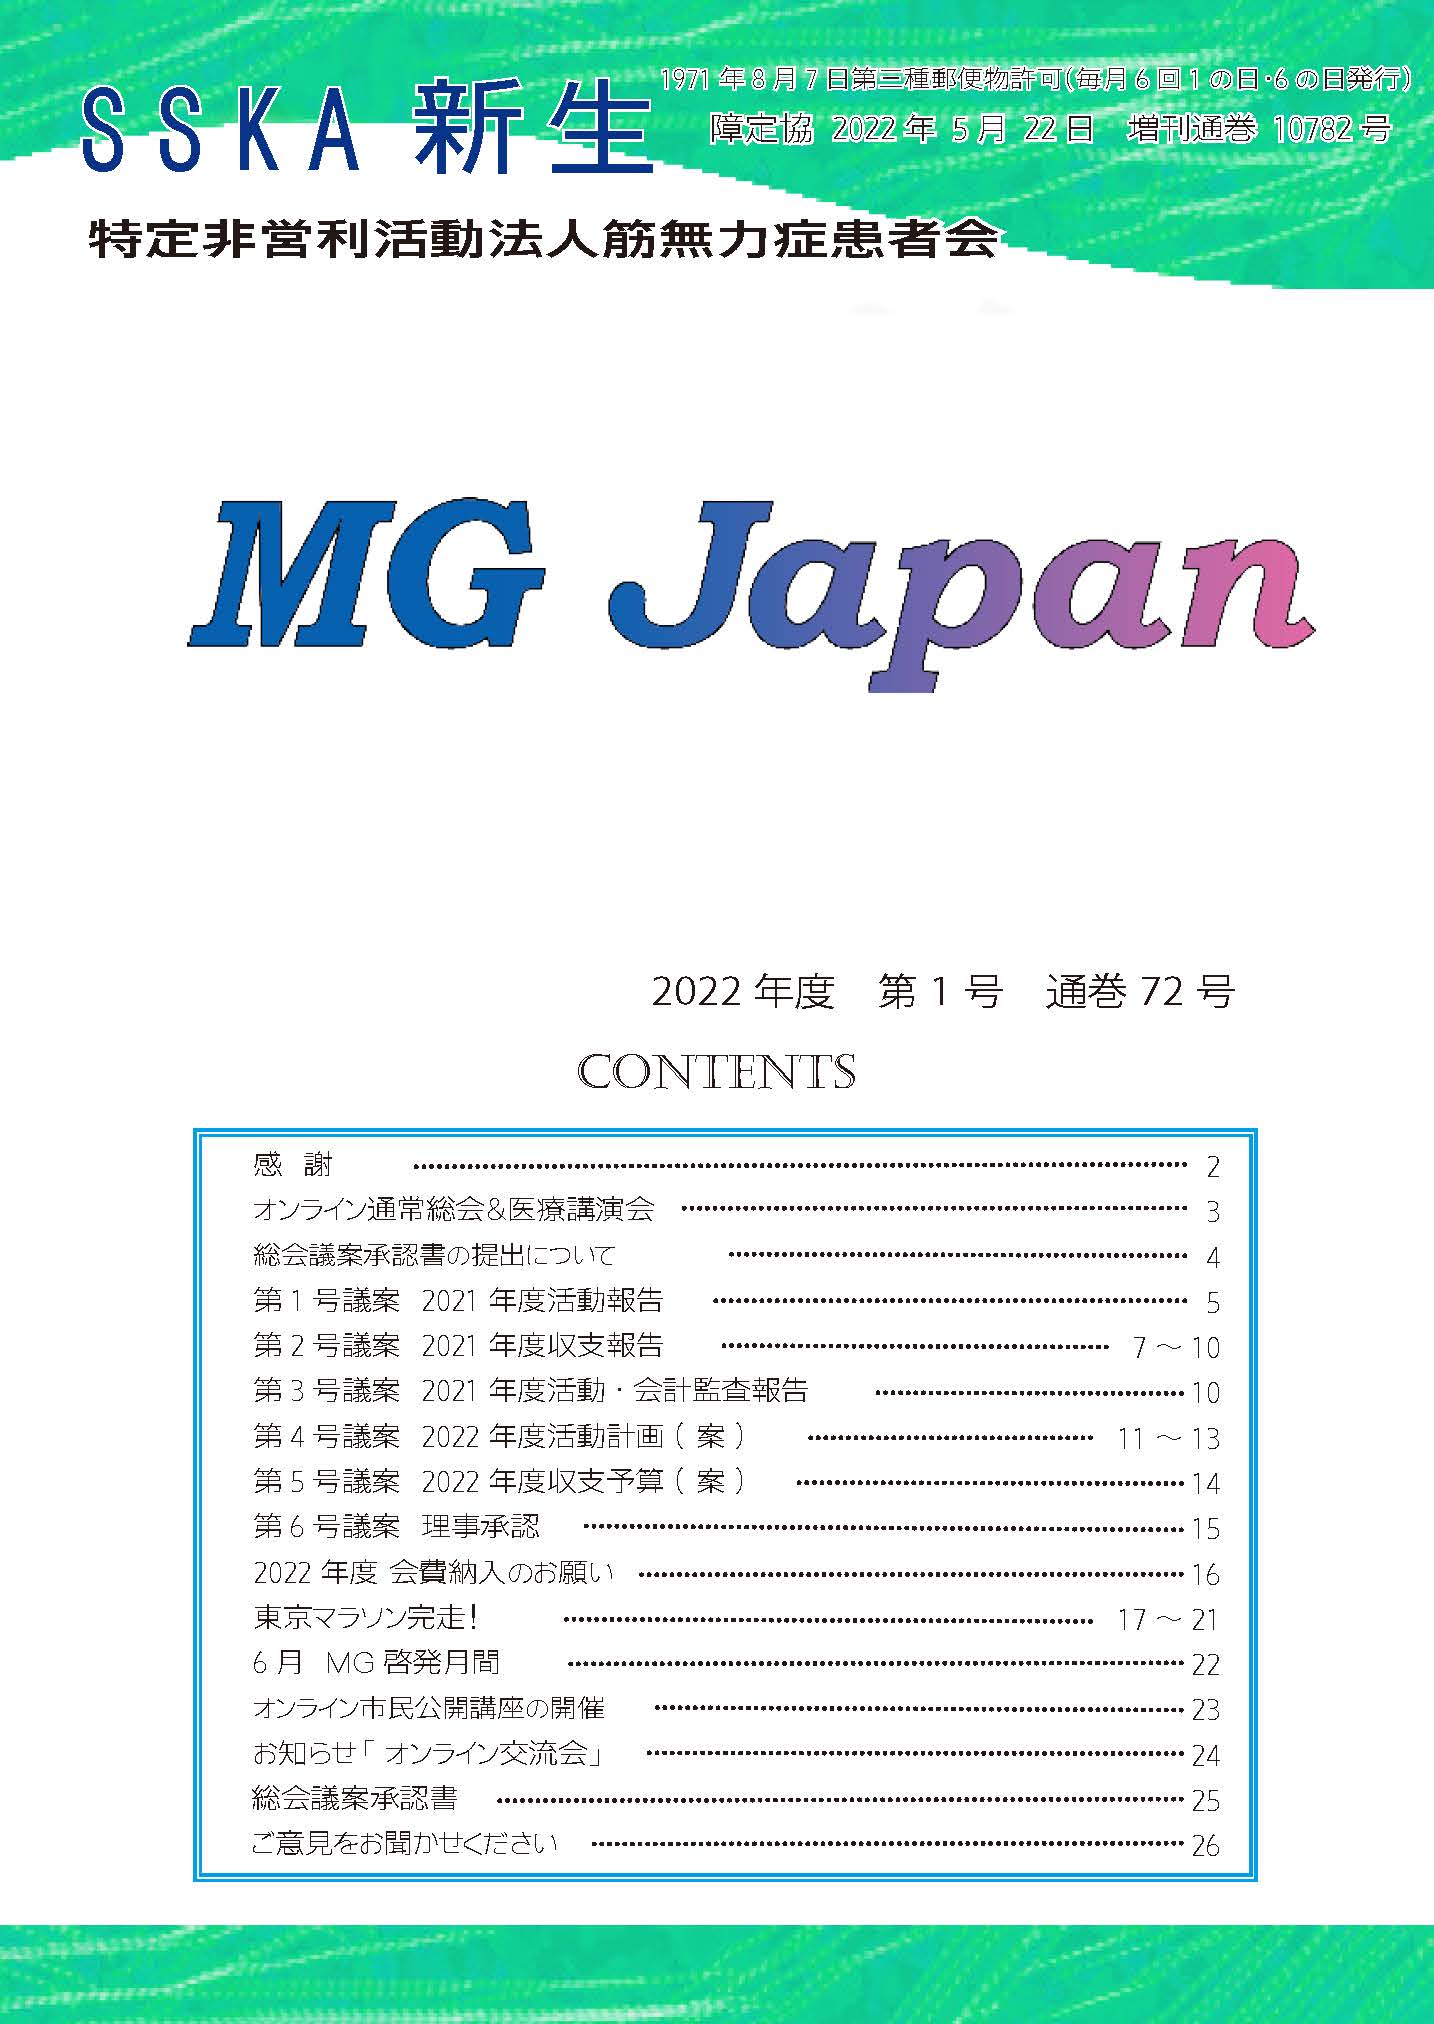 会報新鋭「MG Japan72号」